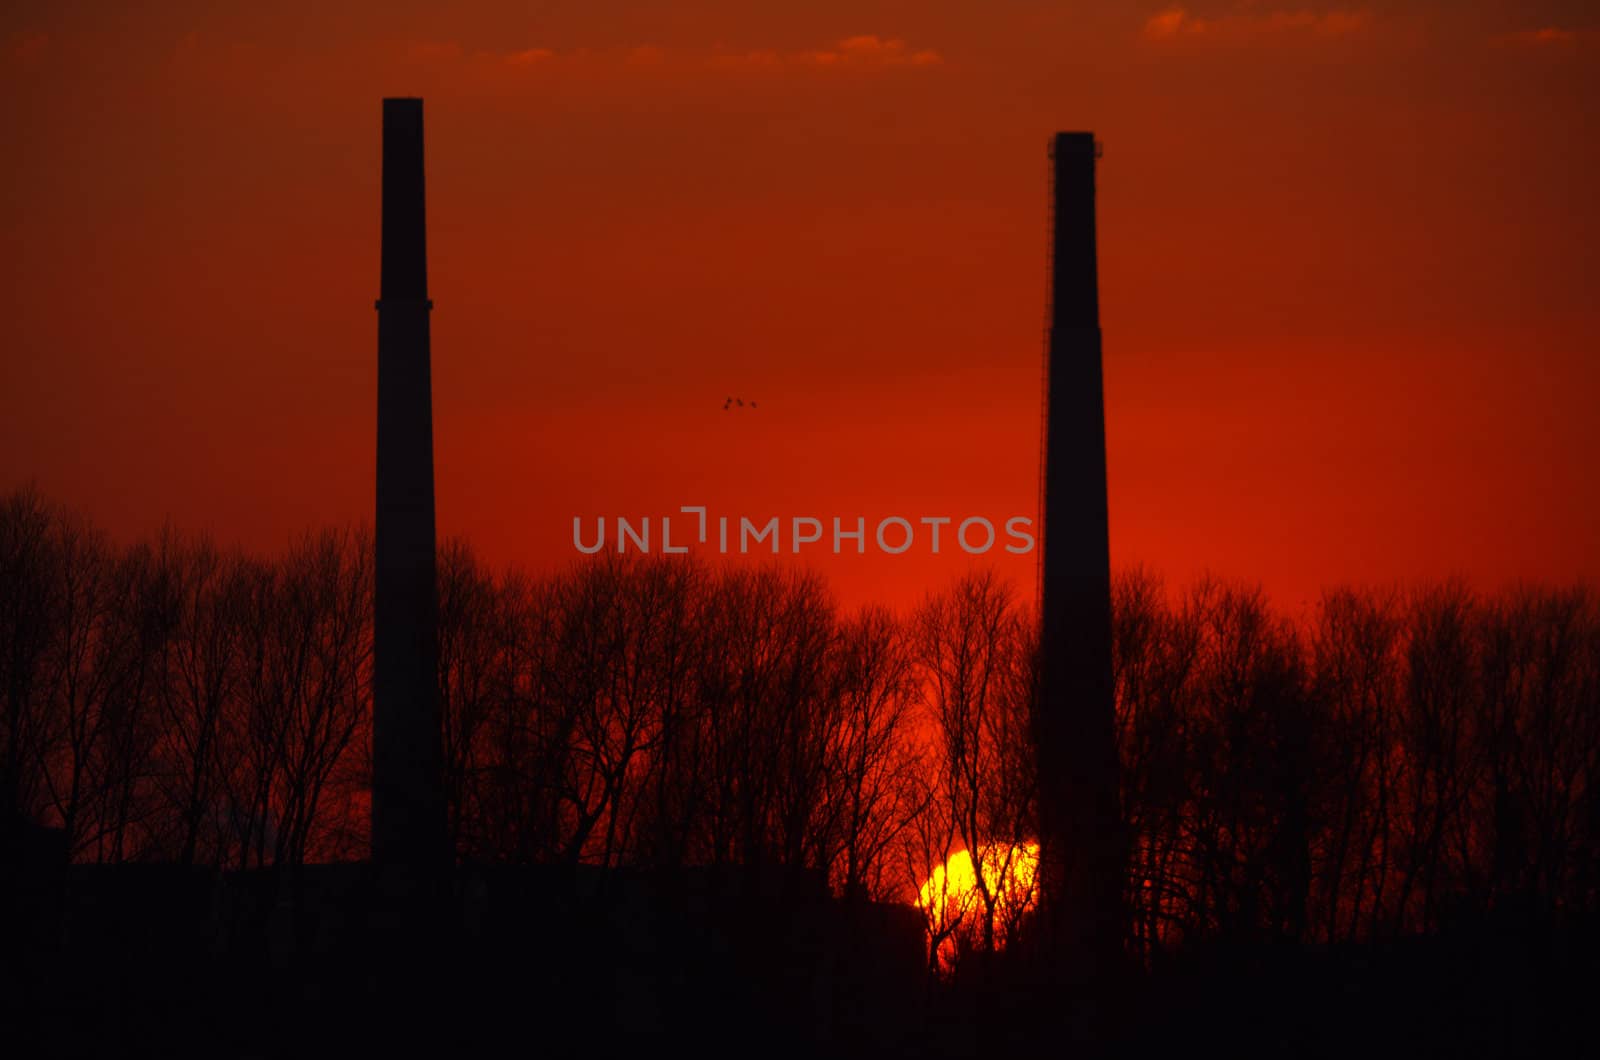 Sunset chimneys by nprause